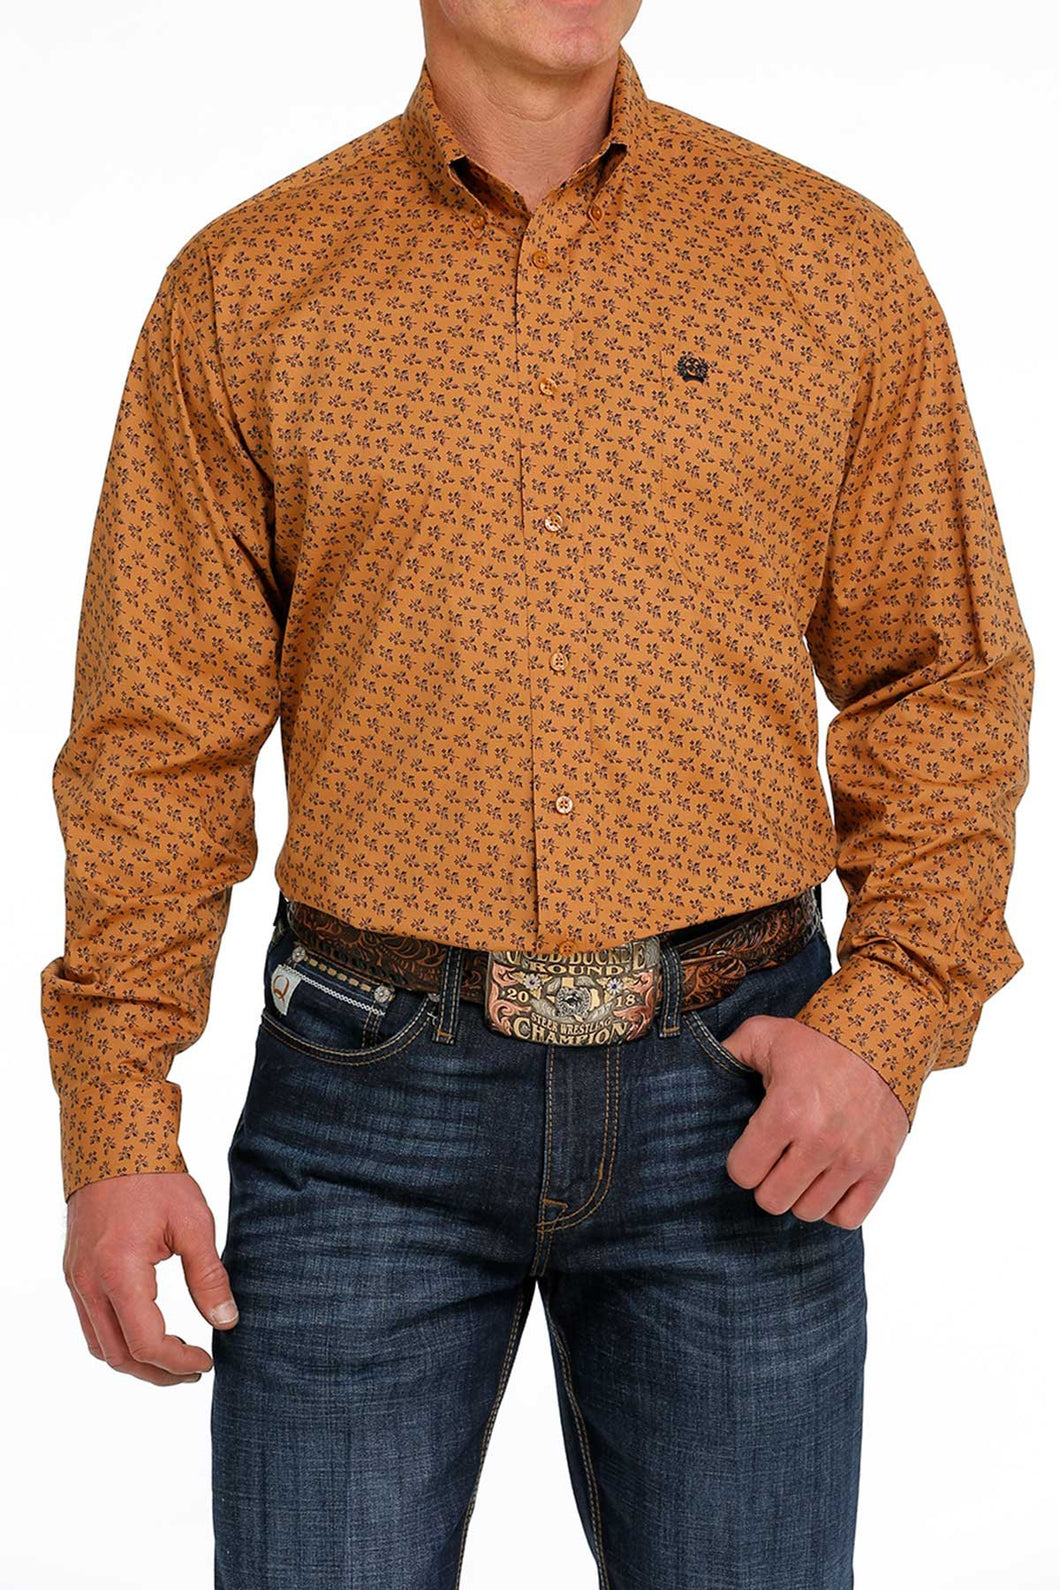 Cinch Men's Caramel Floral Print Western Shirt